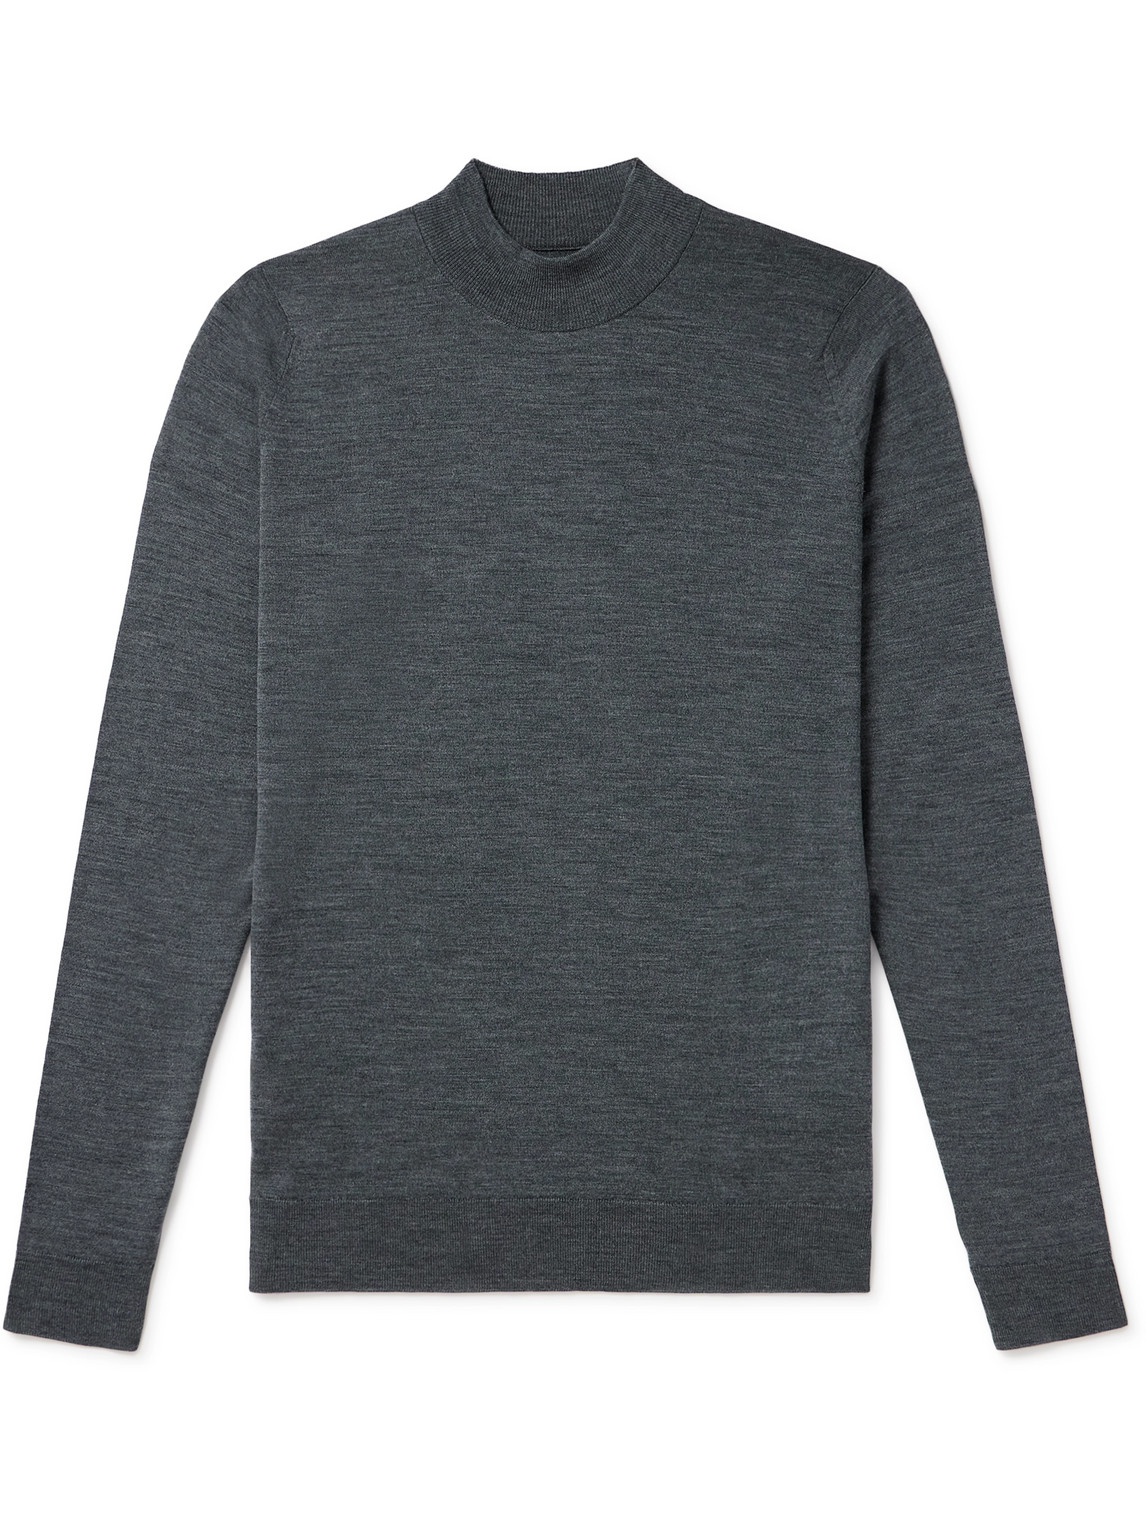 John Smedley Harcourt Merino Wool Mock-neck Sweater In Gray